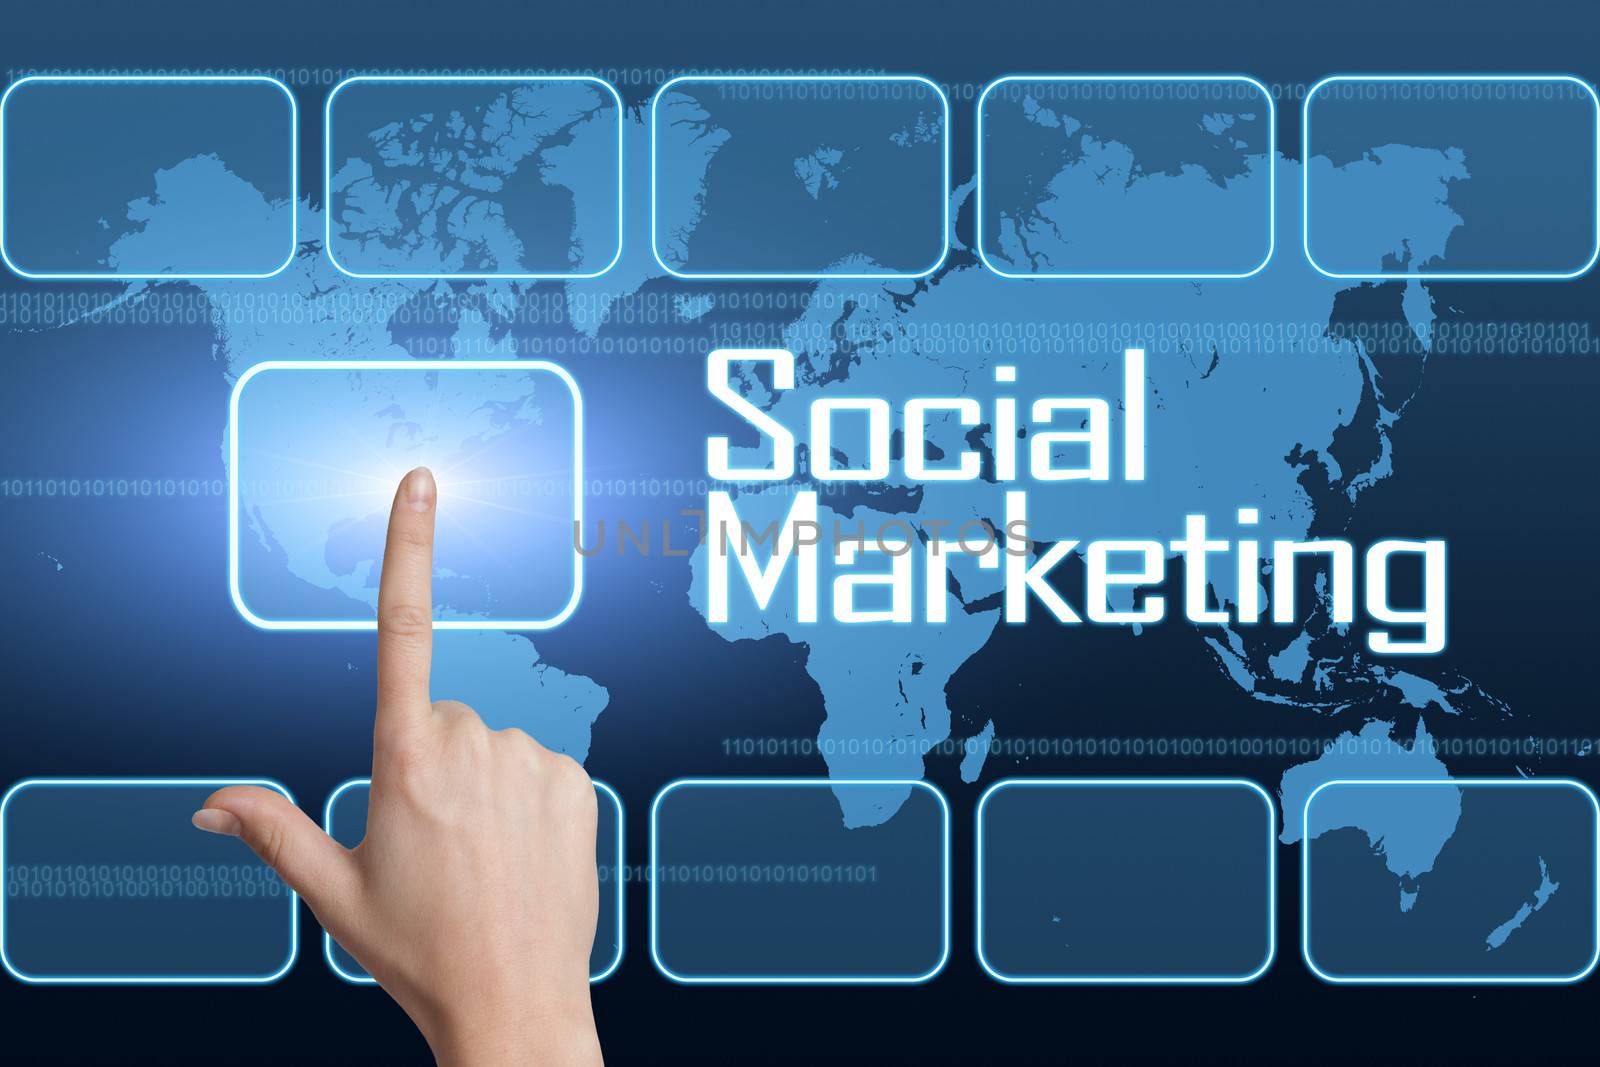 Social Marketing by Mazirama